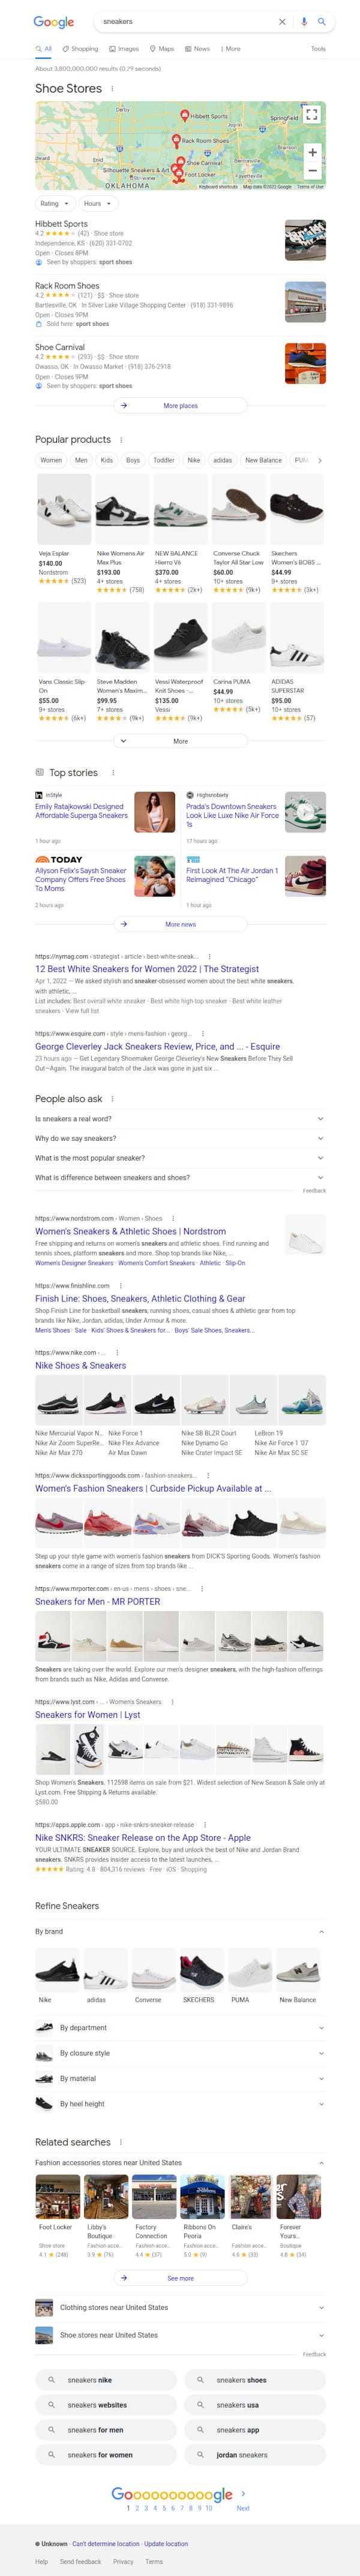 Google Search screenshot